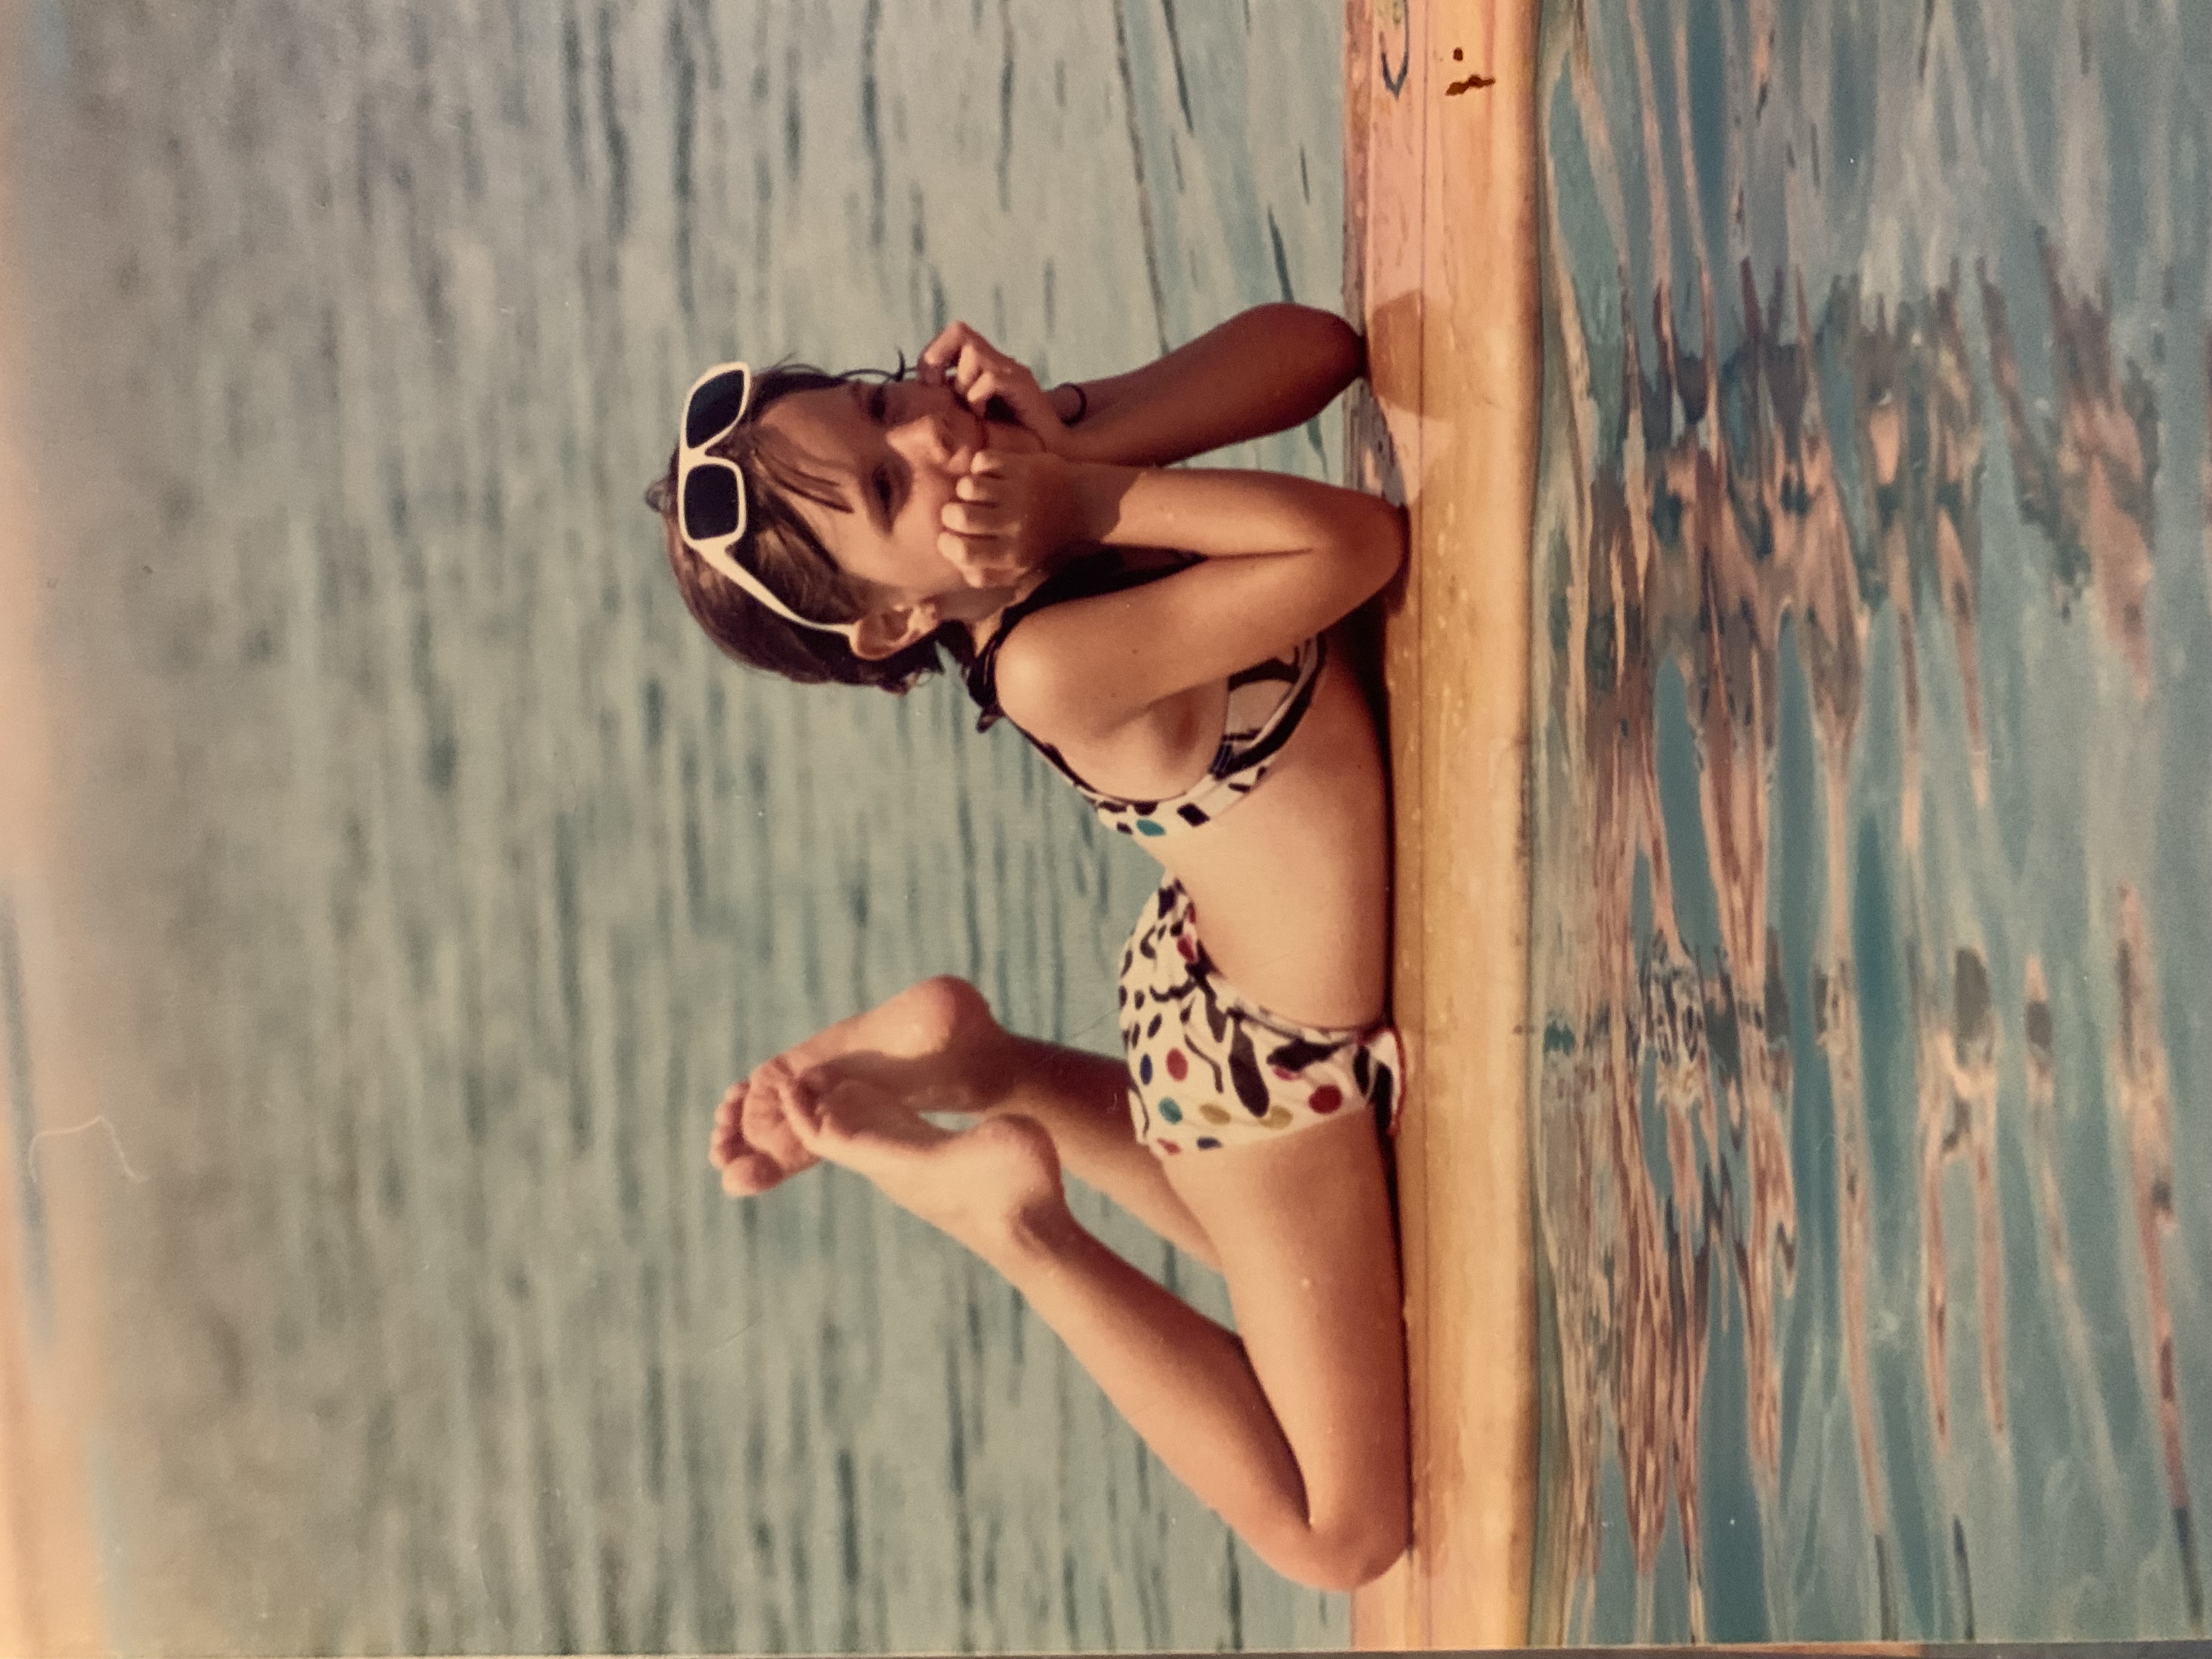 young Megan floating on surfboard in pool - vintage